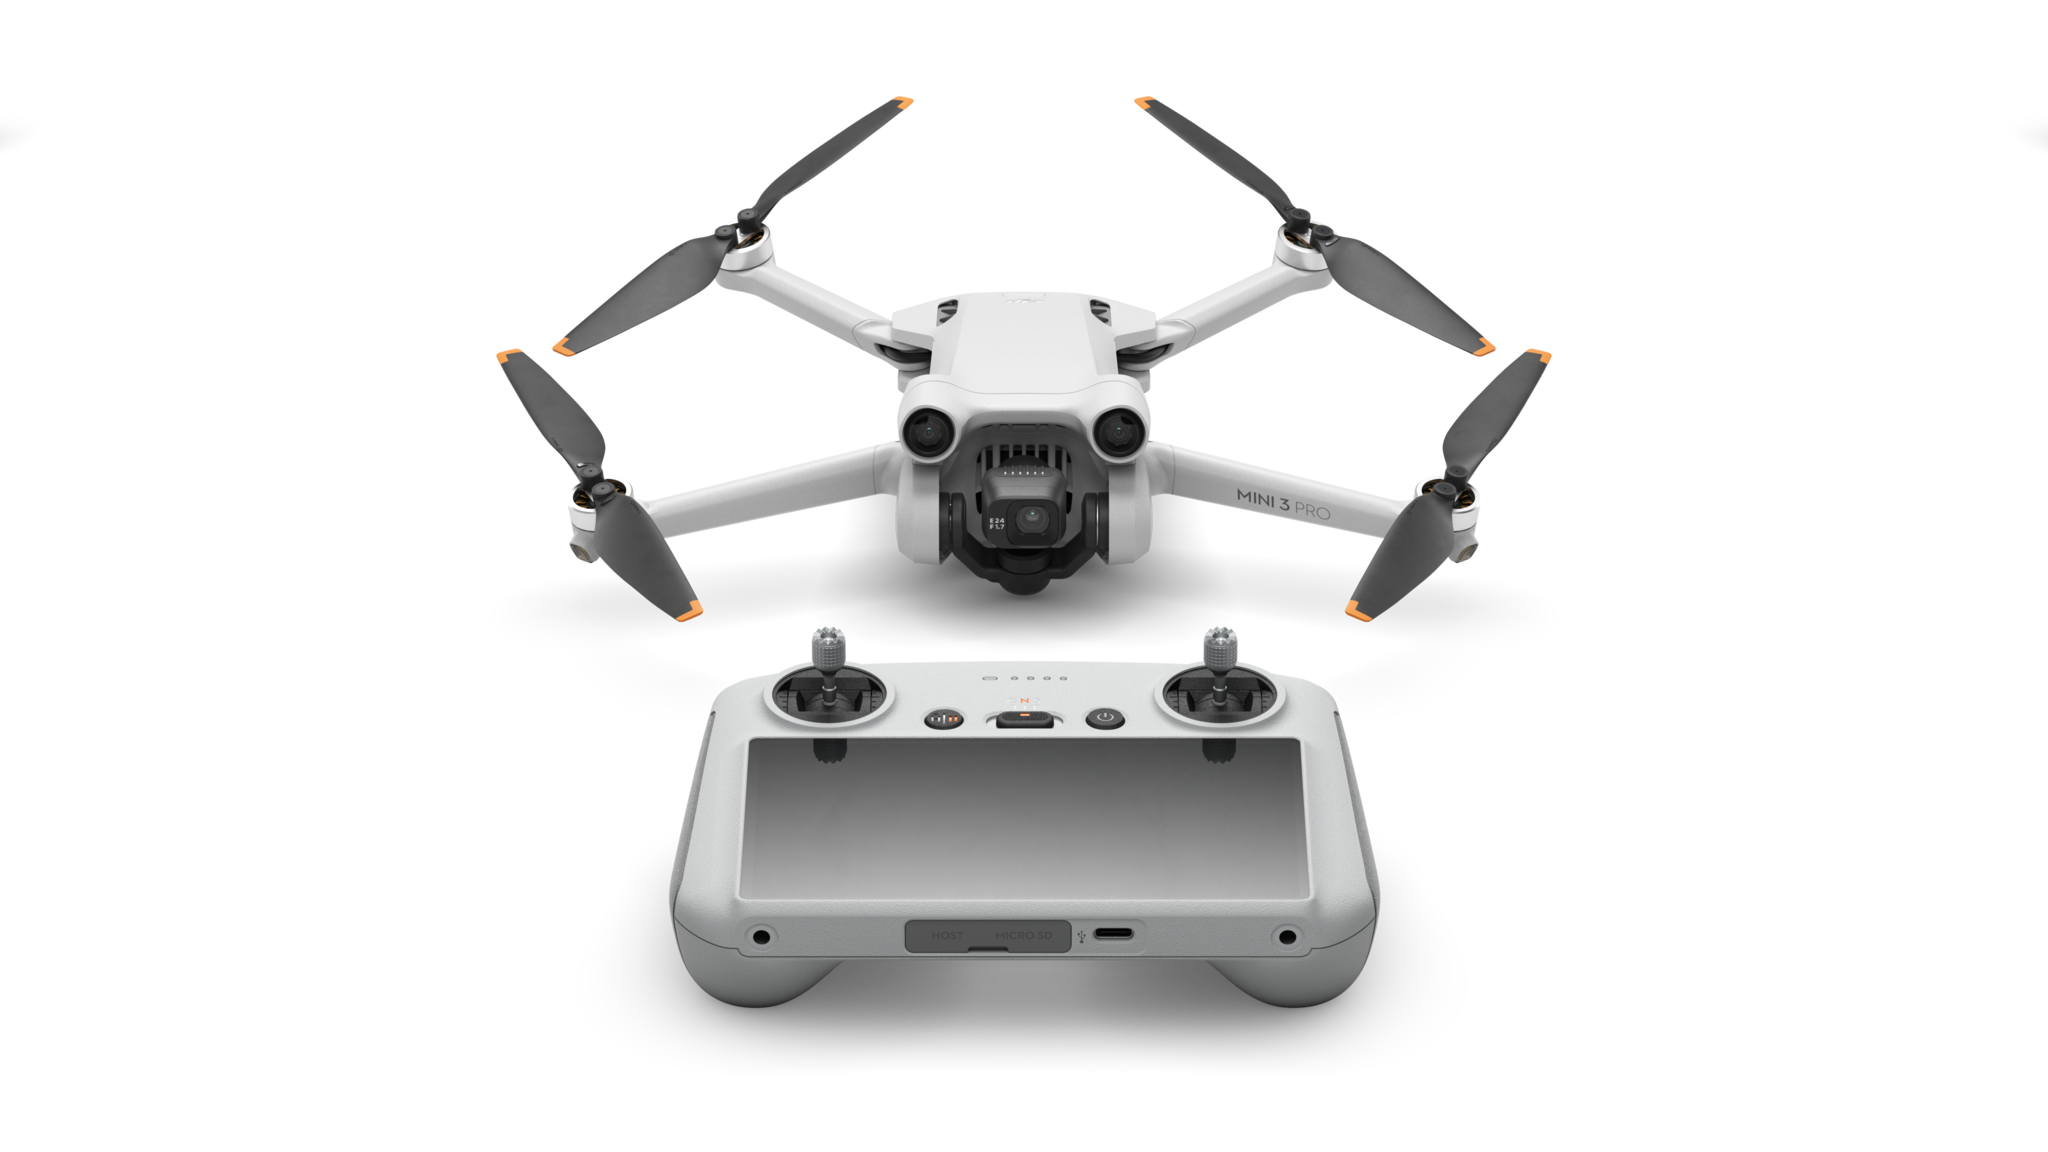 https://www.quadcopter-shop.nl/dji-mini-3-pro-including-dji-rc-smart-remote-contr.html